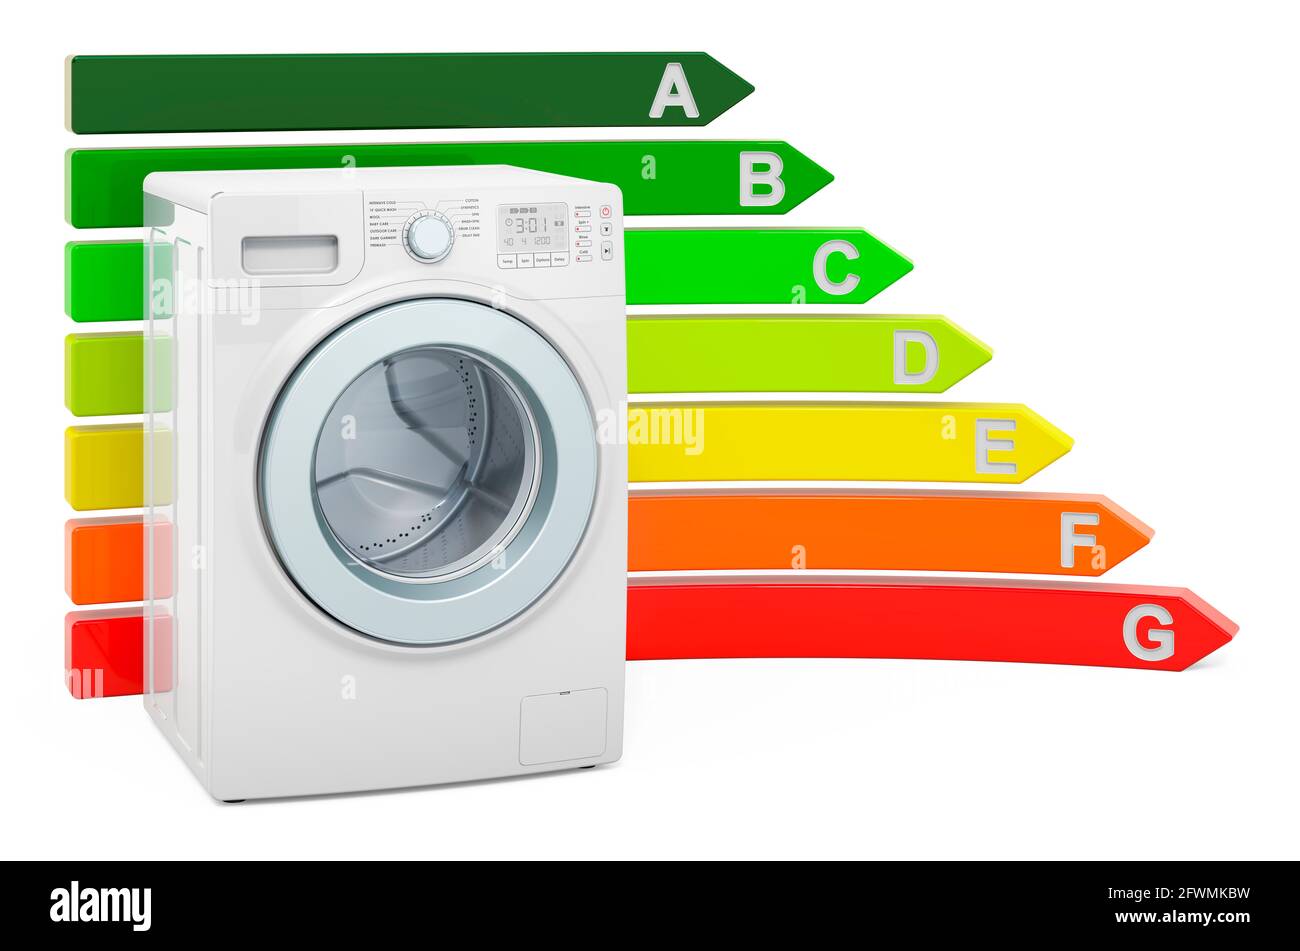 Diagram washing machine energy rating hi-res stock photography and images -  Alamy